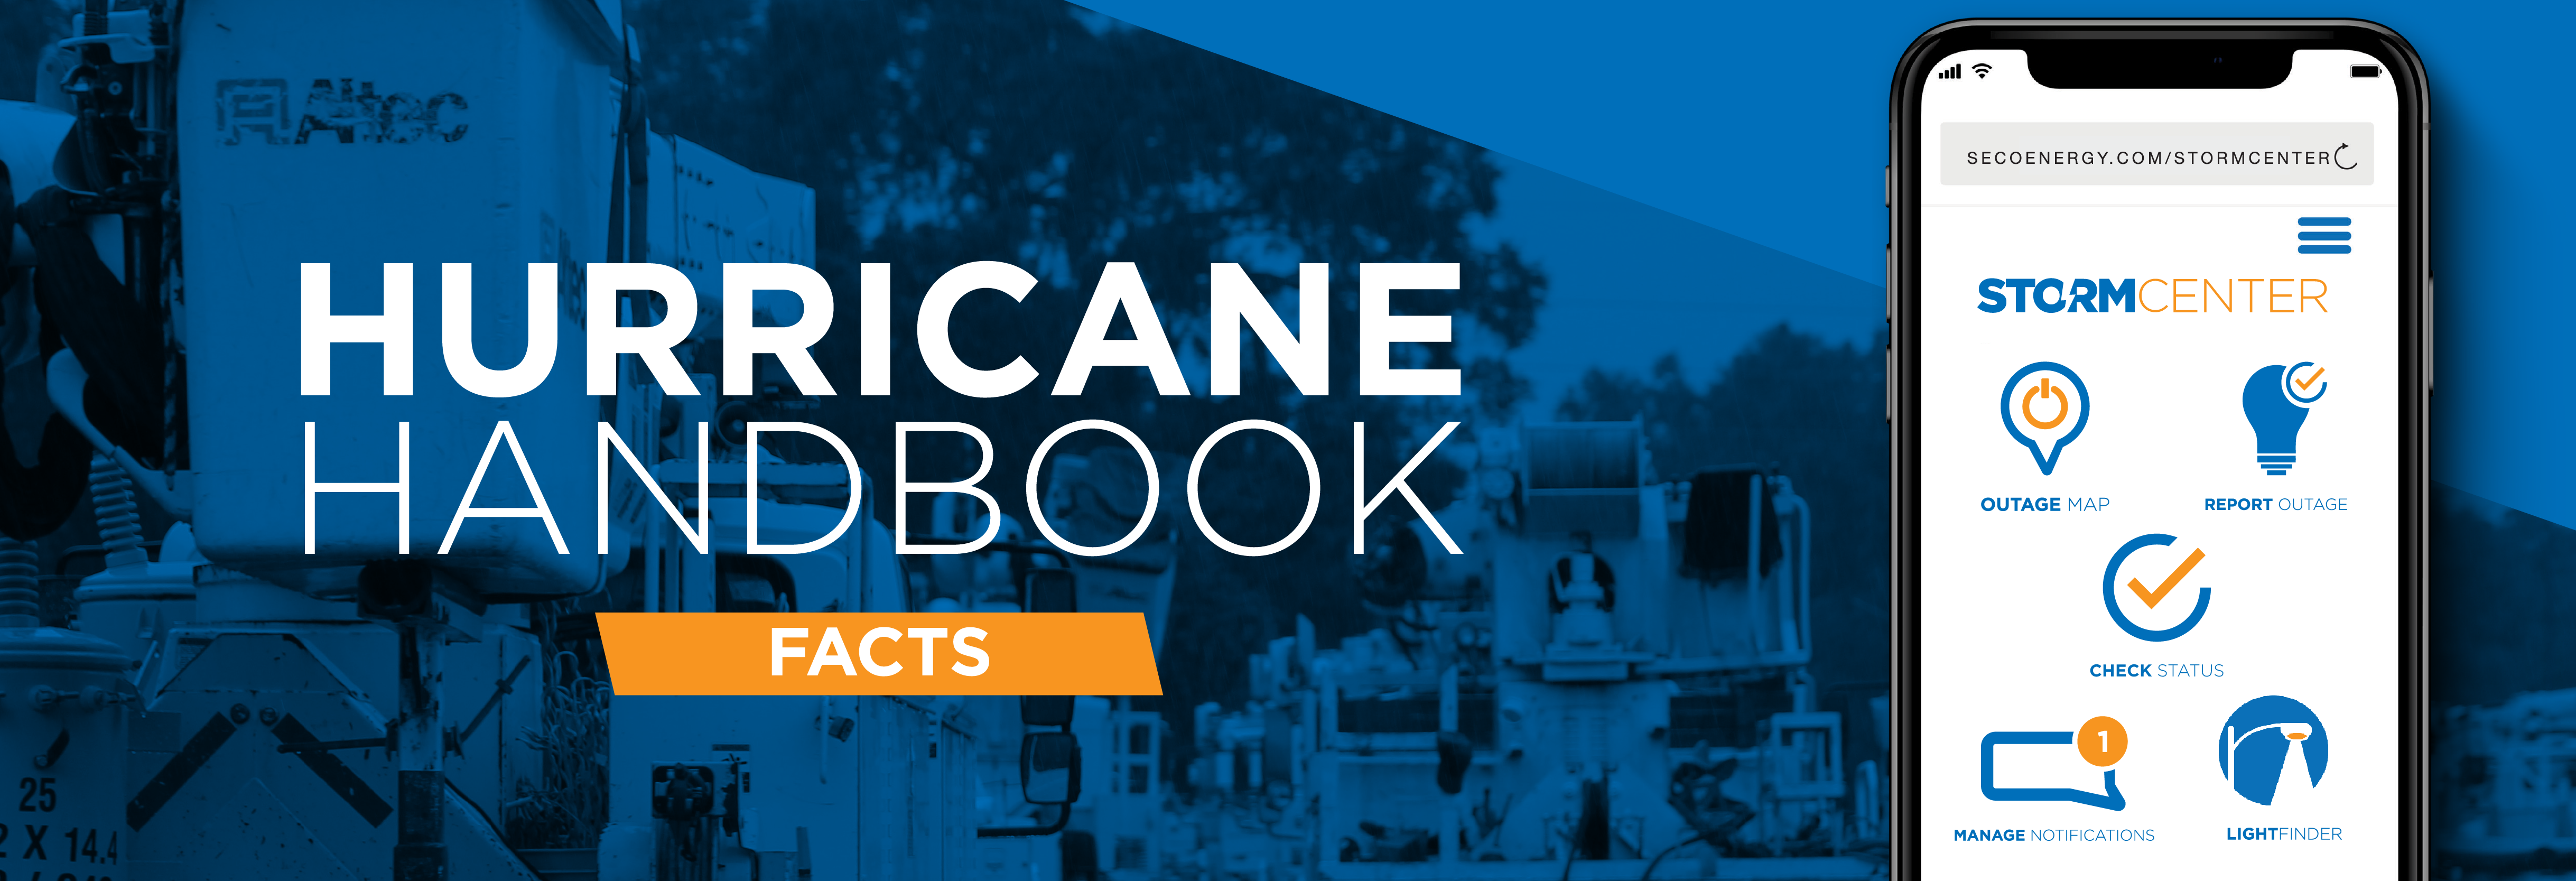 SECO News September 2019 Hurricane Handbook